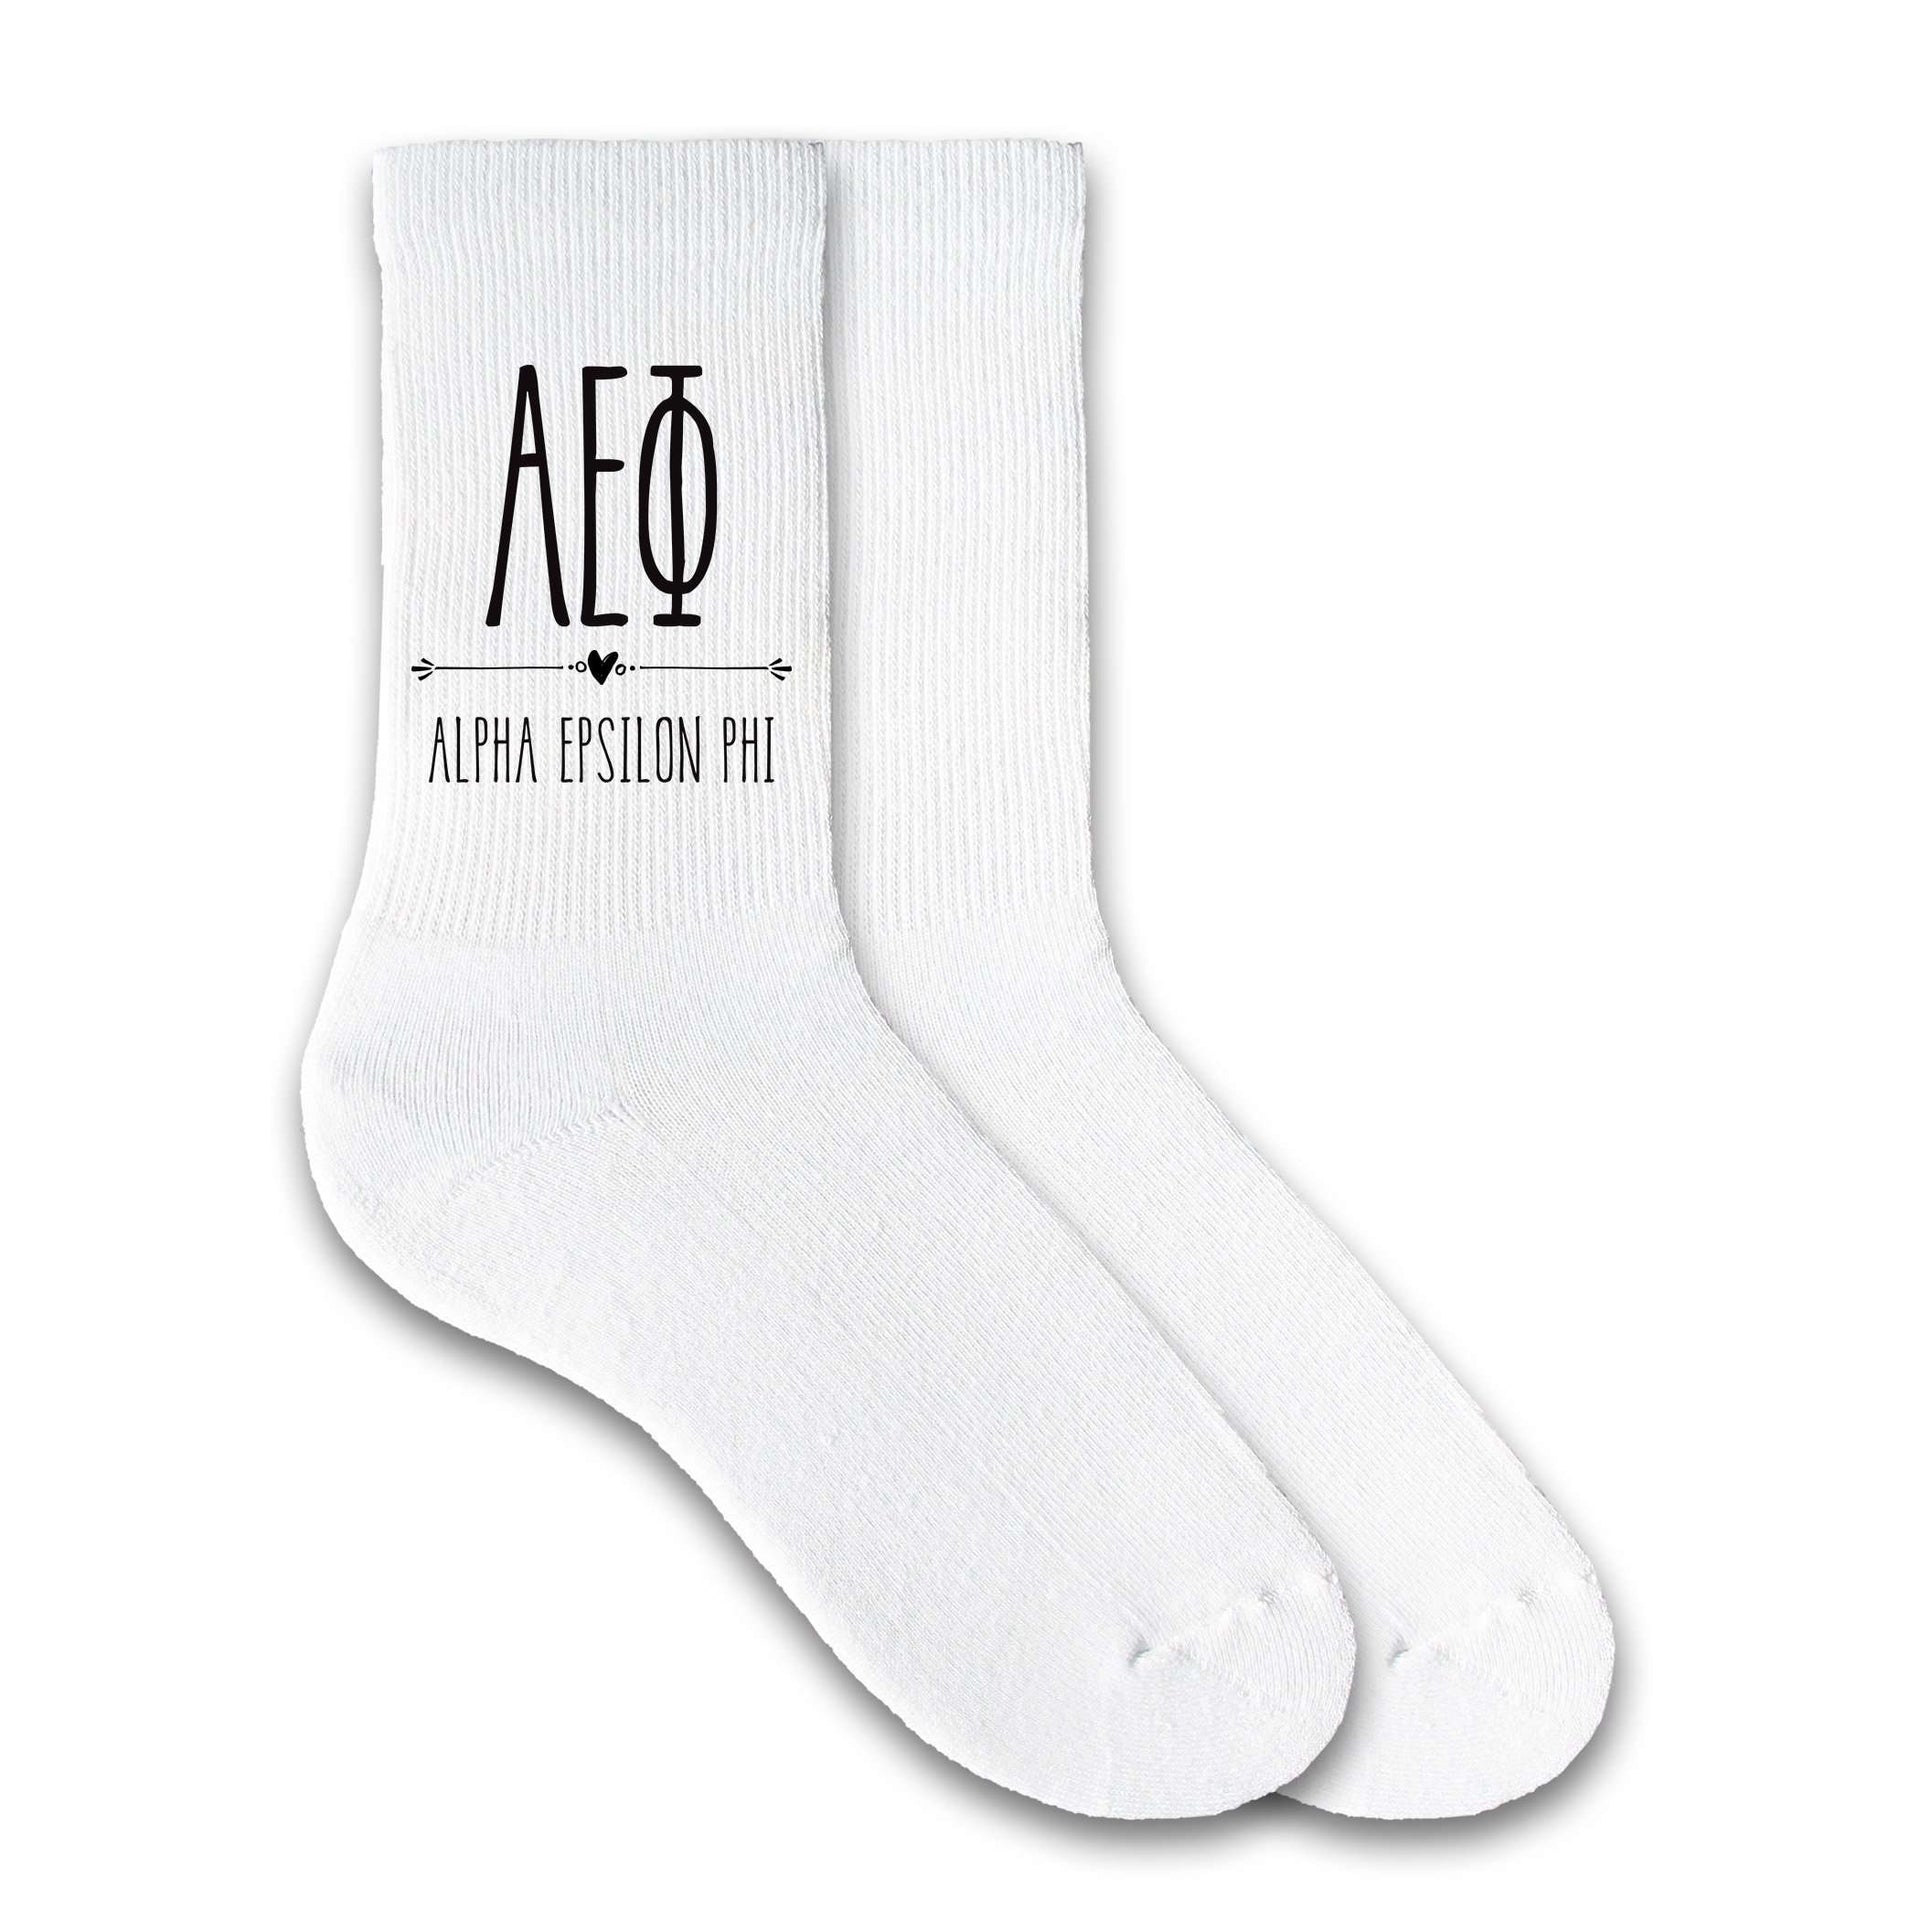 Alpha Epsilon Phi sorority name and letters custom printed on white cotton crew socks